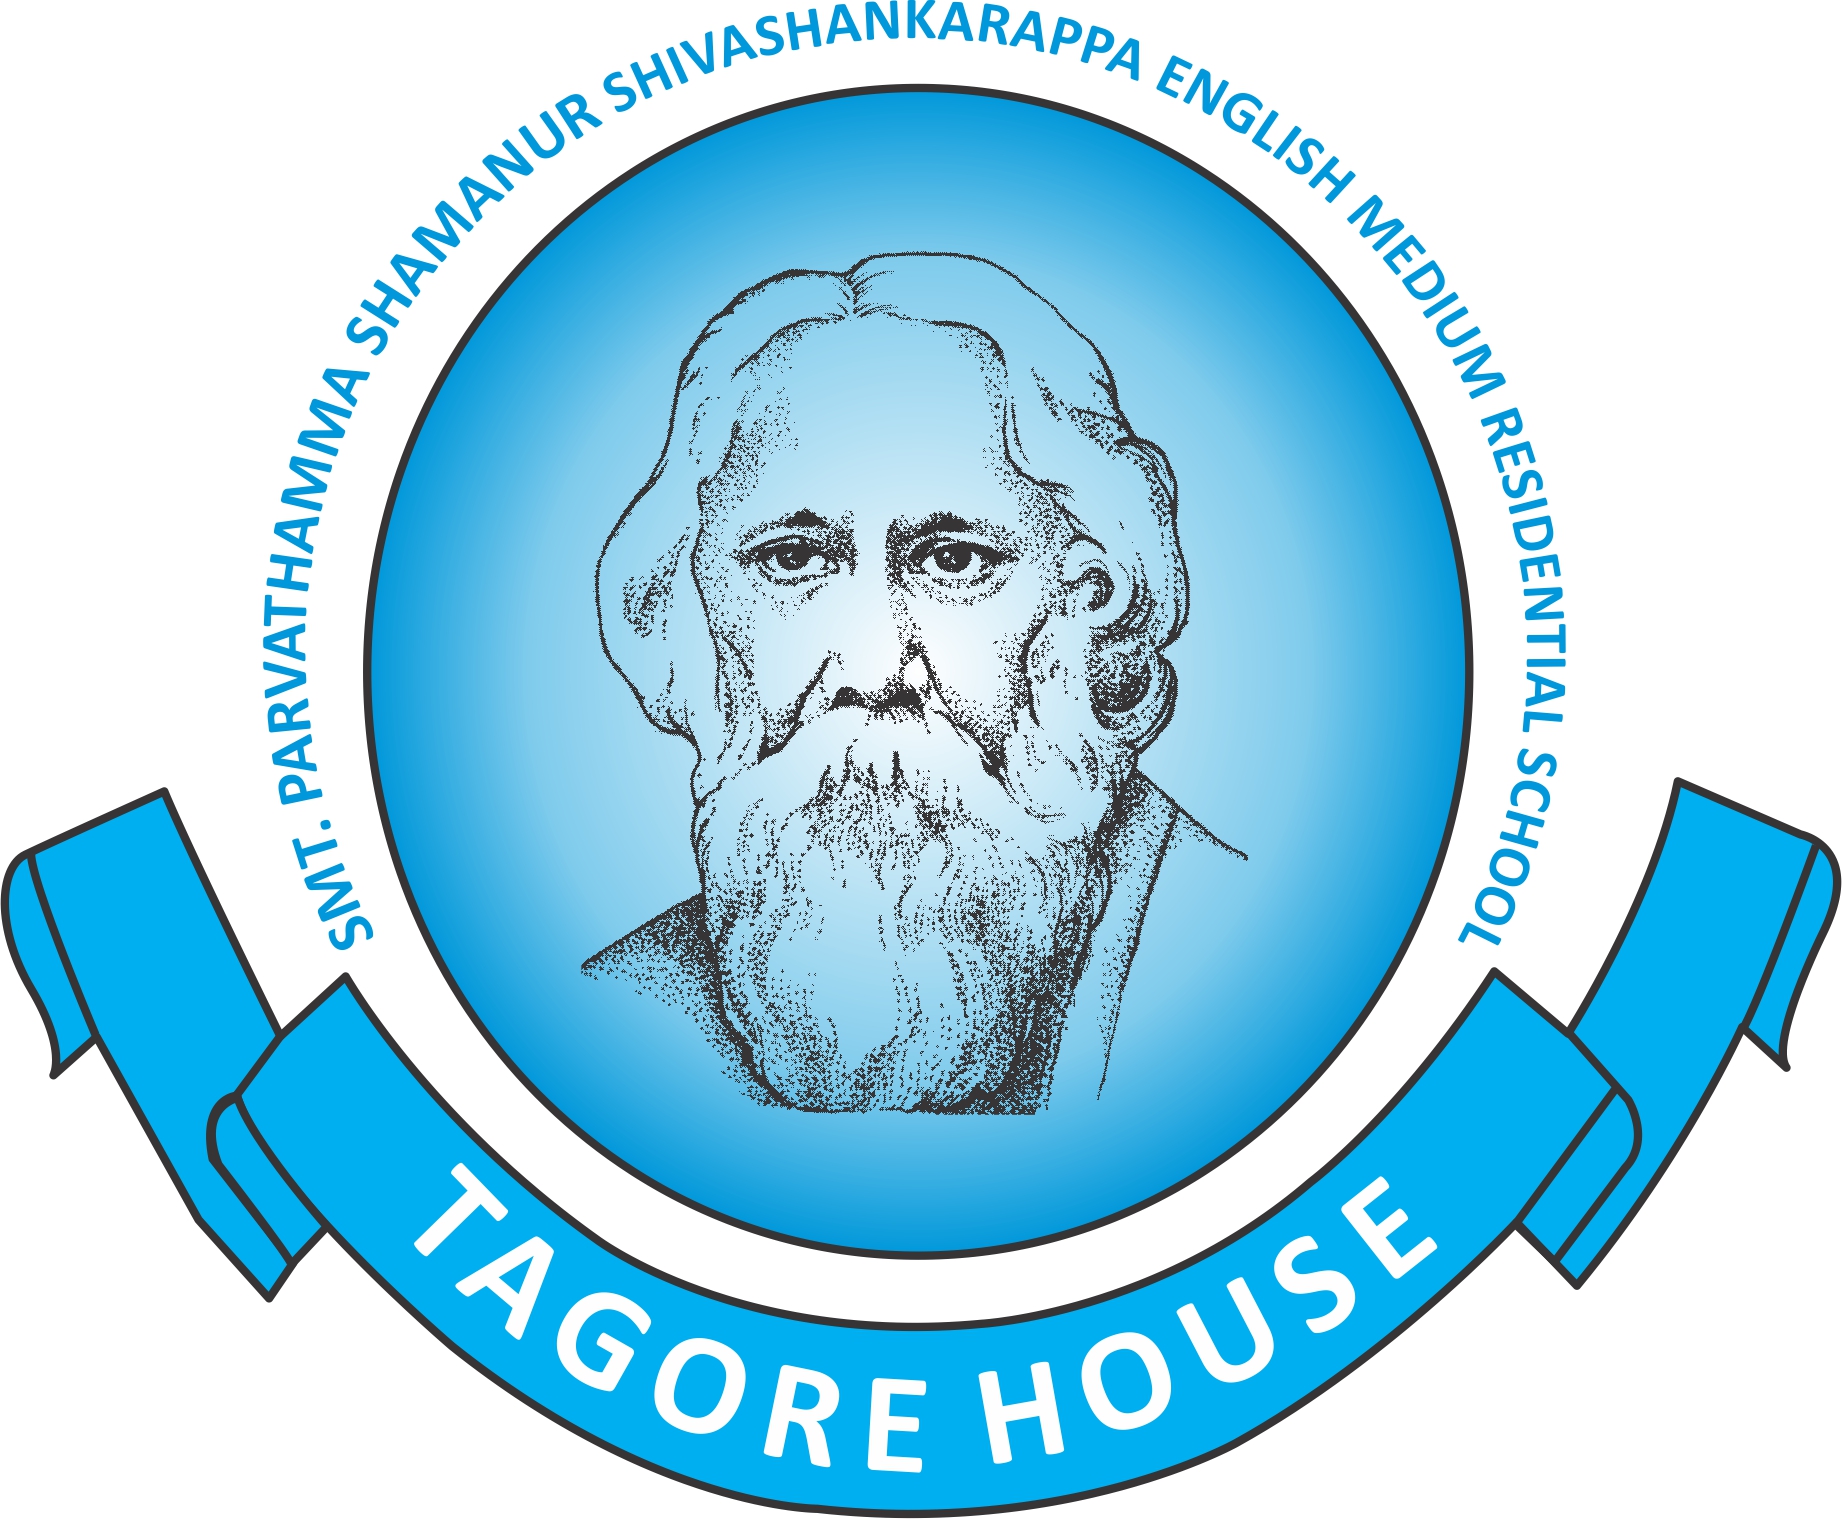 Pssemr School Tagore House